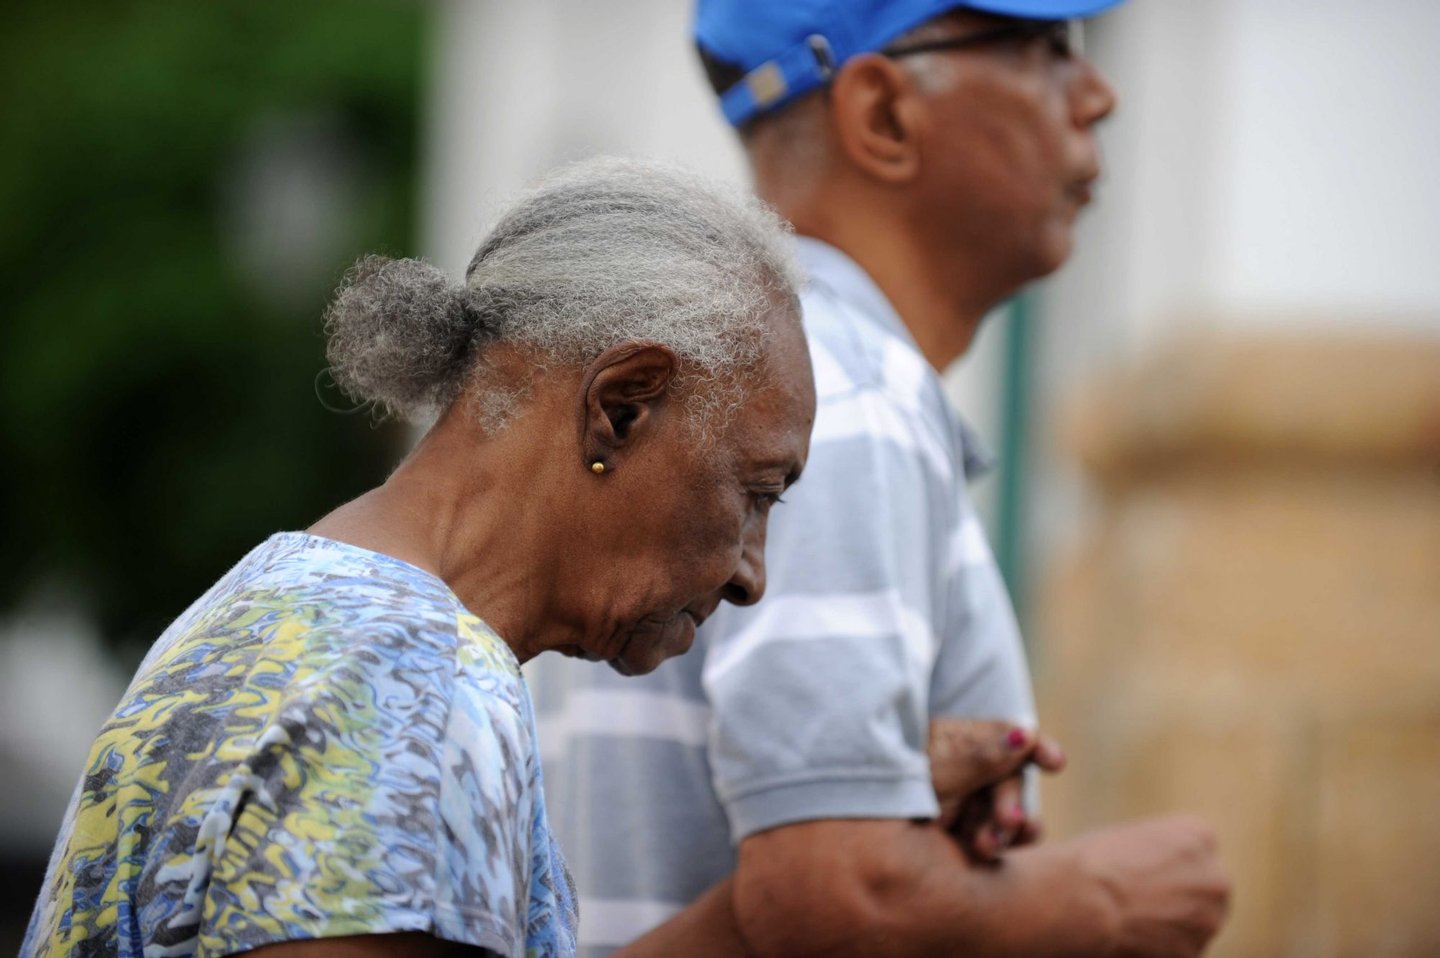 An elderly couple walks along a street in Paraty, 280km south of Rio de Janeiro, Brazil on April 7, 2012. AFP PHOTO /VANDERLEI ALMEIDA (Photo credit should read VANDERLEI ALMEIDA/AFP/Getty Images)